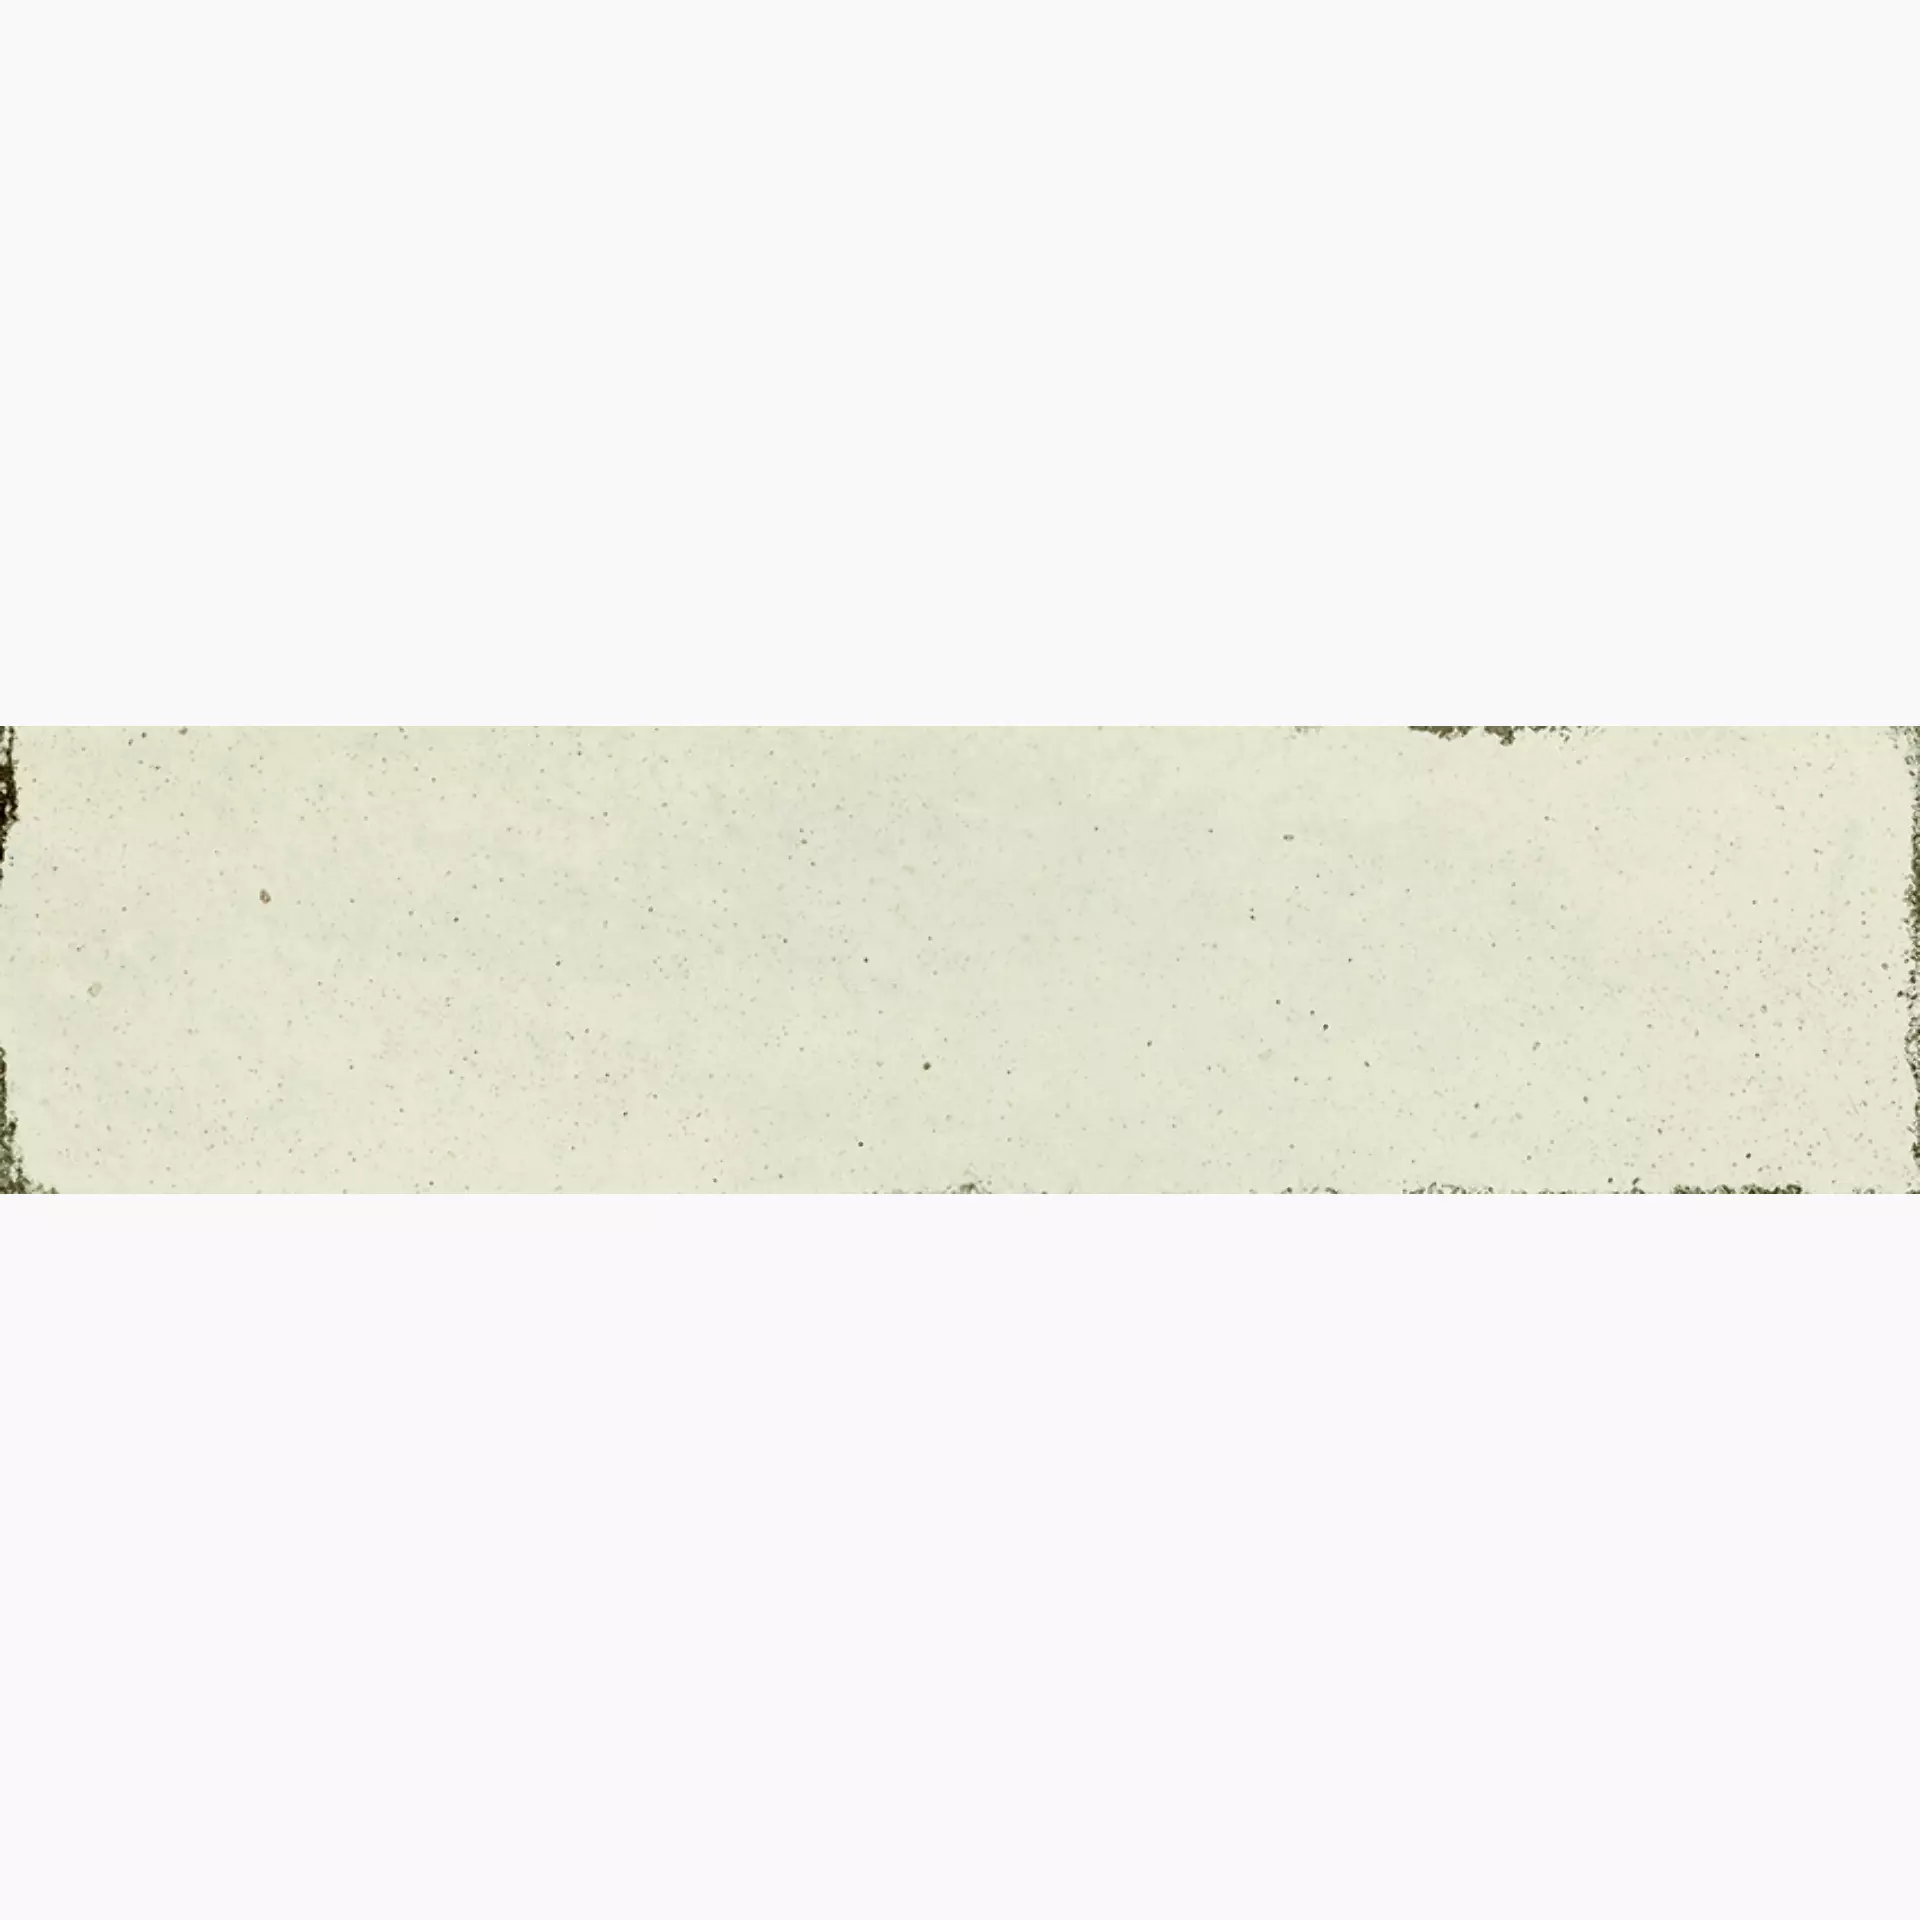 Fondovalle Brit White Shiny White BRI001 glaenzend 6x24,6cm 9mm